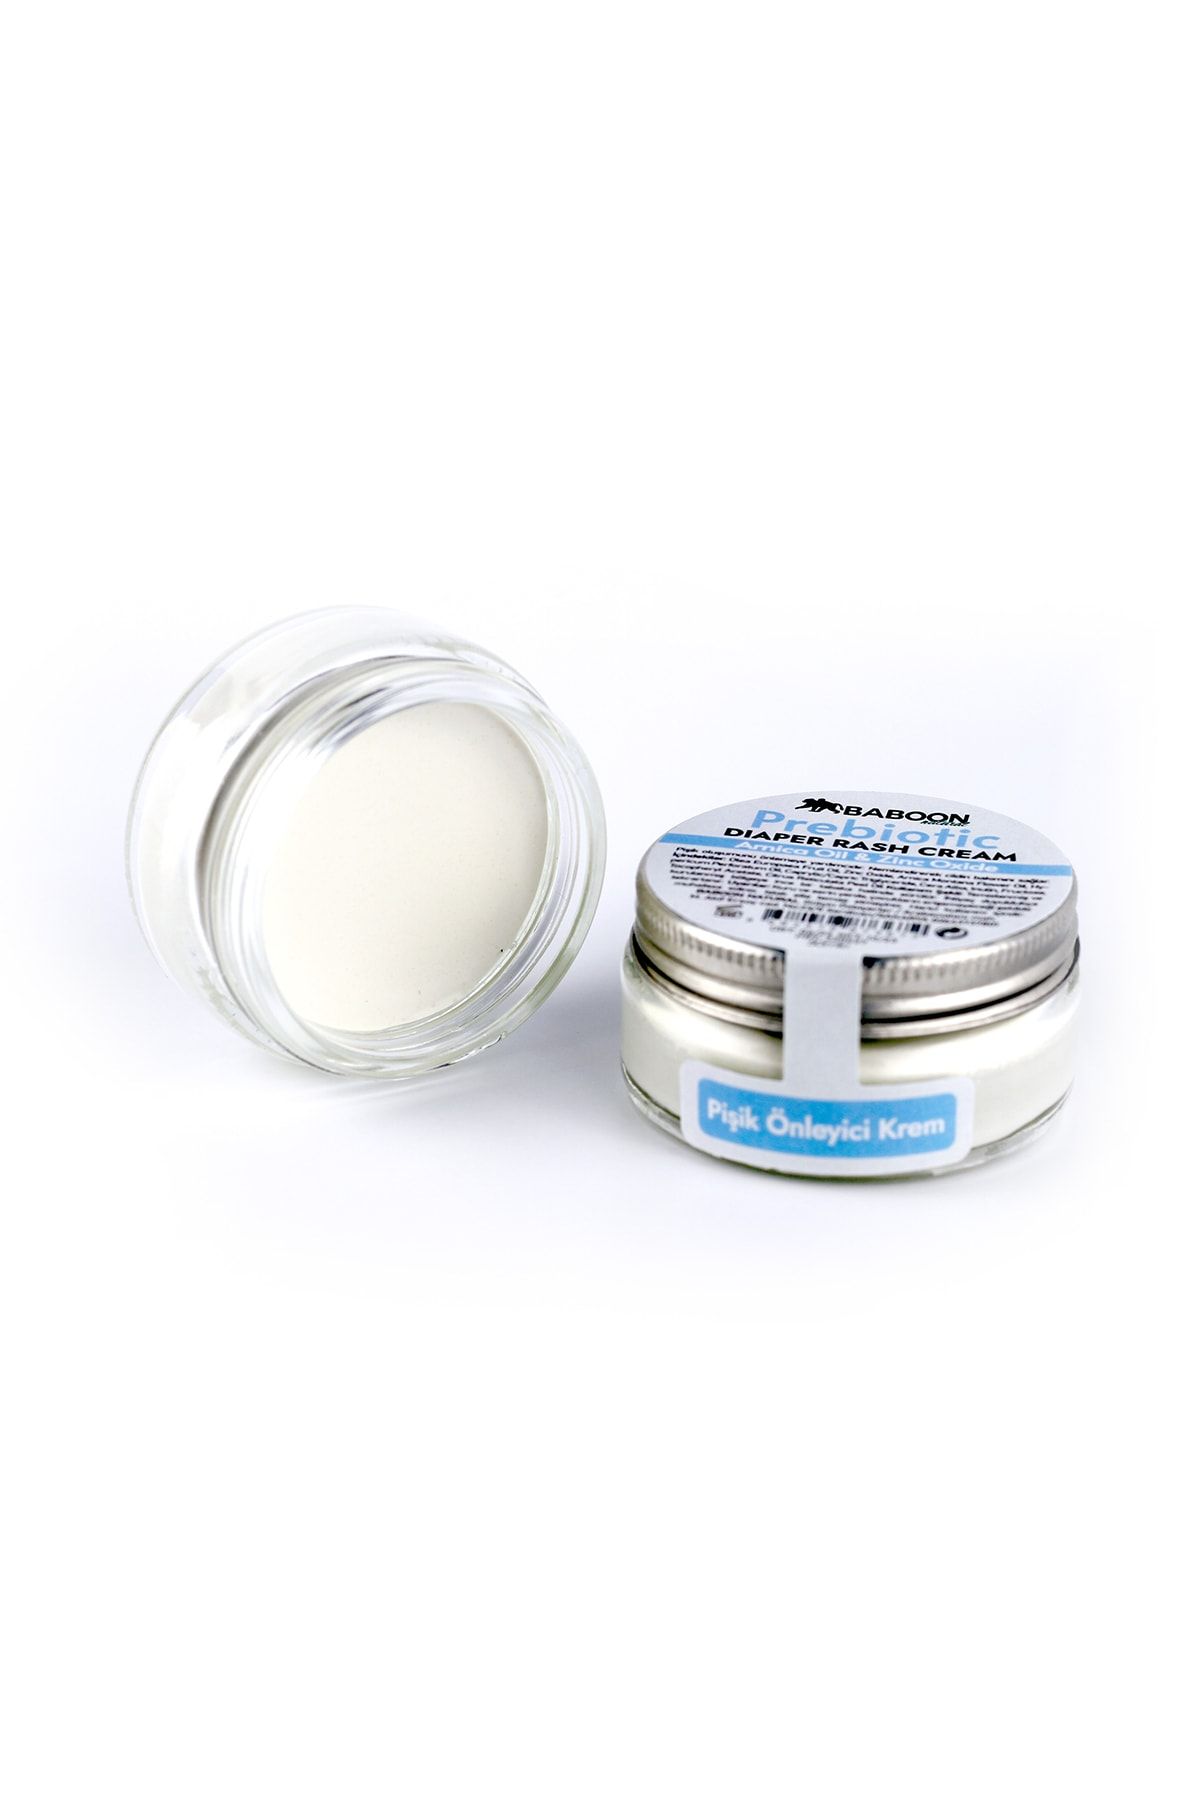 Baboon Natural Prebiyotikli Pişik Önleyici Krem - Prebiotic Diaper Rash Cream 50 ml